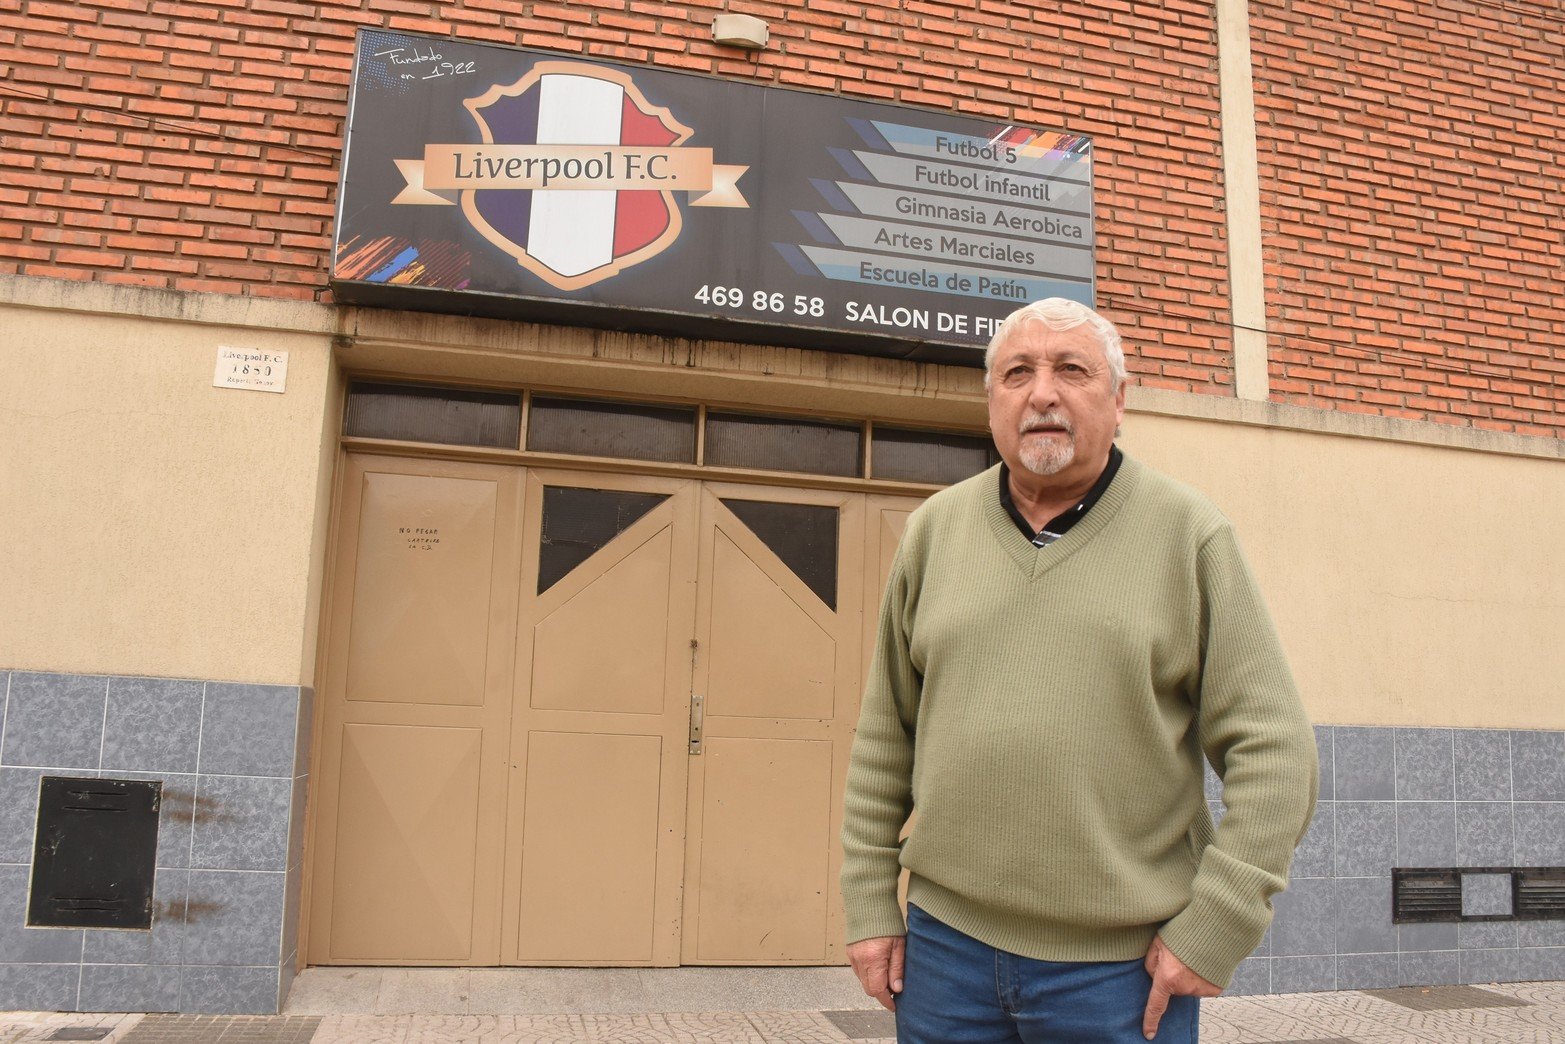 Club Liverpool de Santa Fe, cumple un siglo de vida. Foto Guillermo Di Salvatore